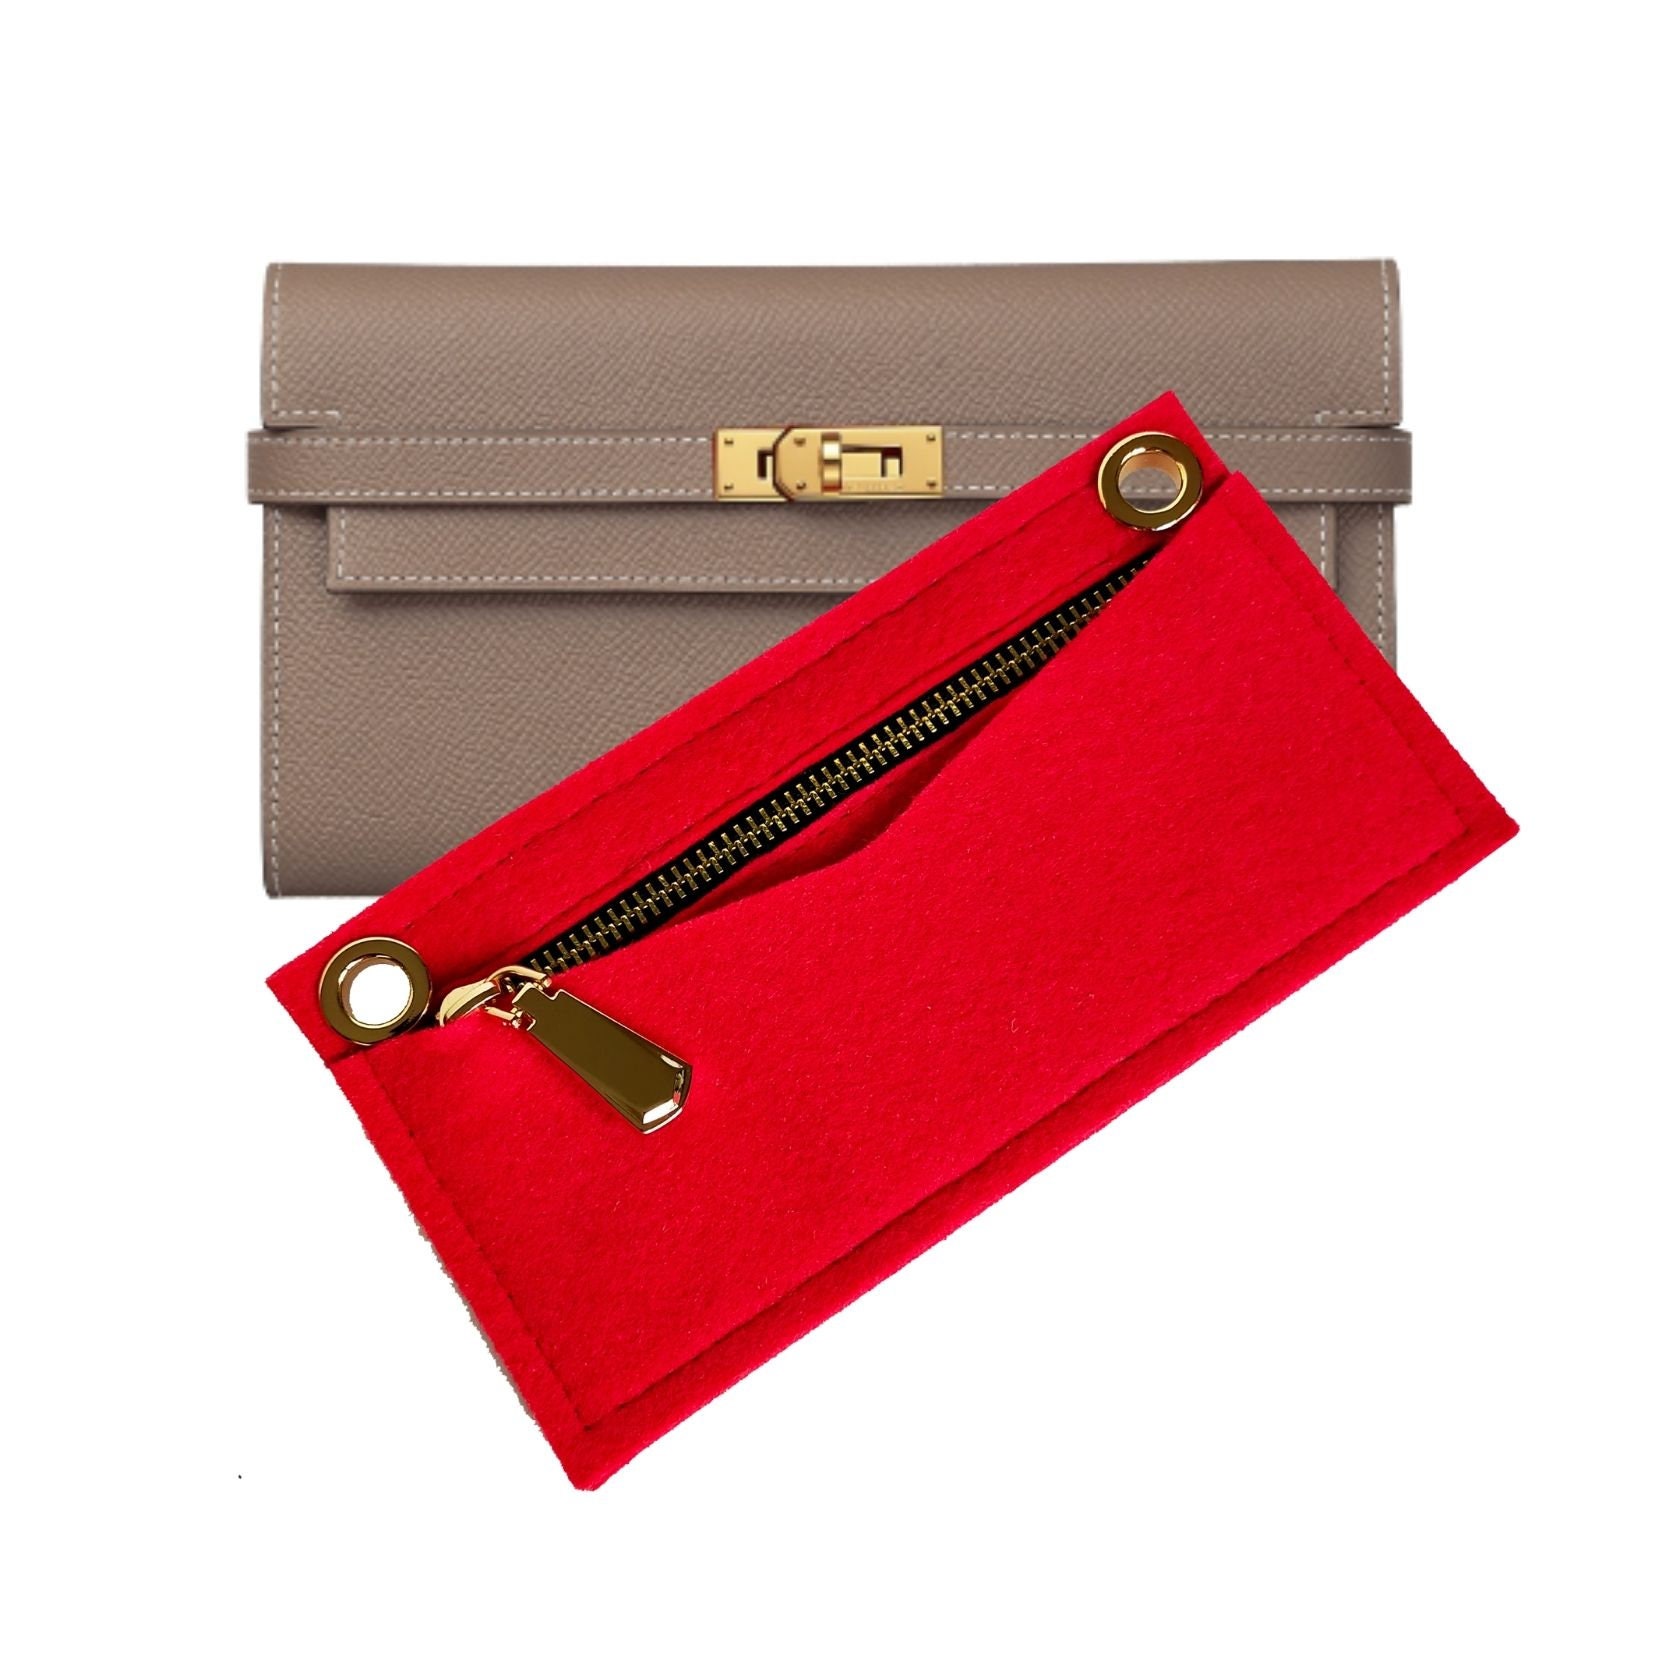 Kelly Classique Wallet Conversion Kit w Zipper Bag & O Rings 